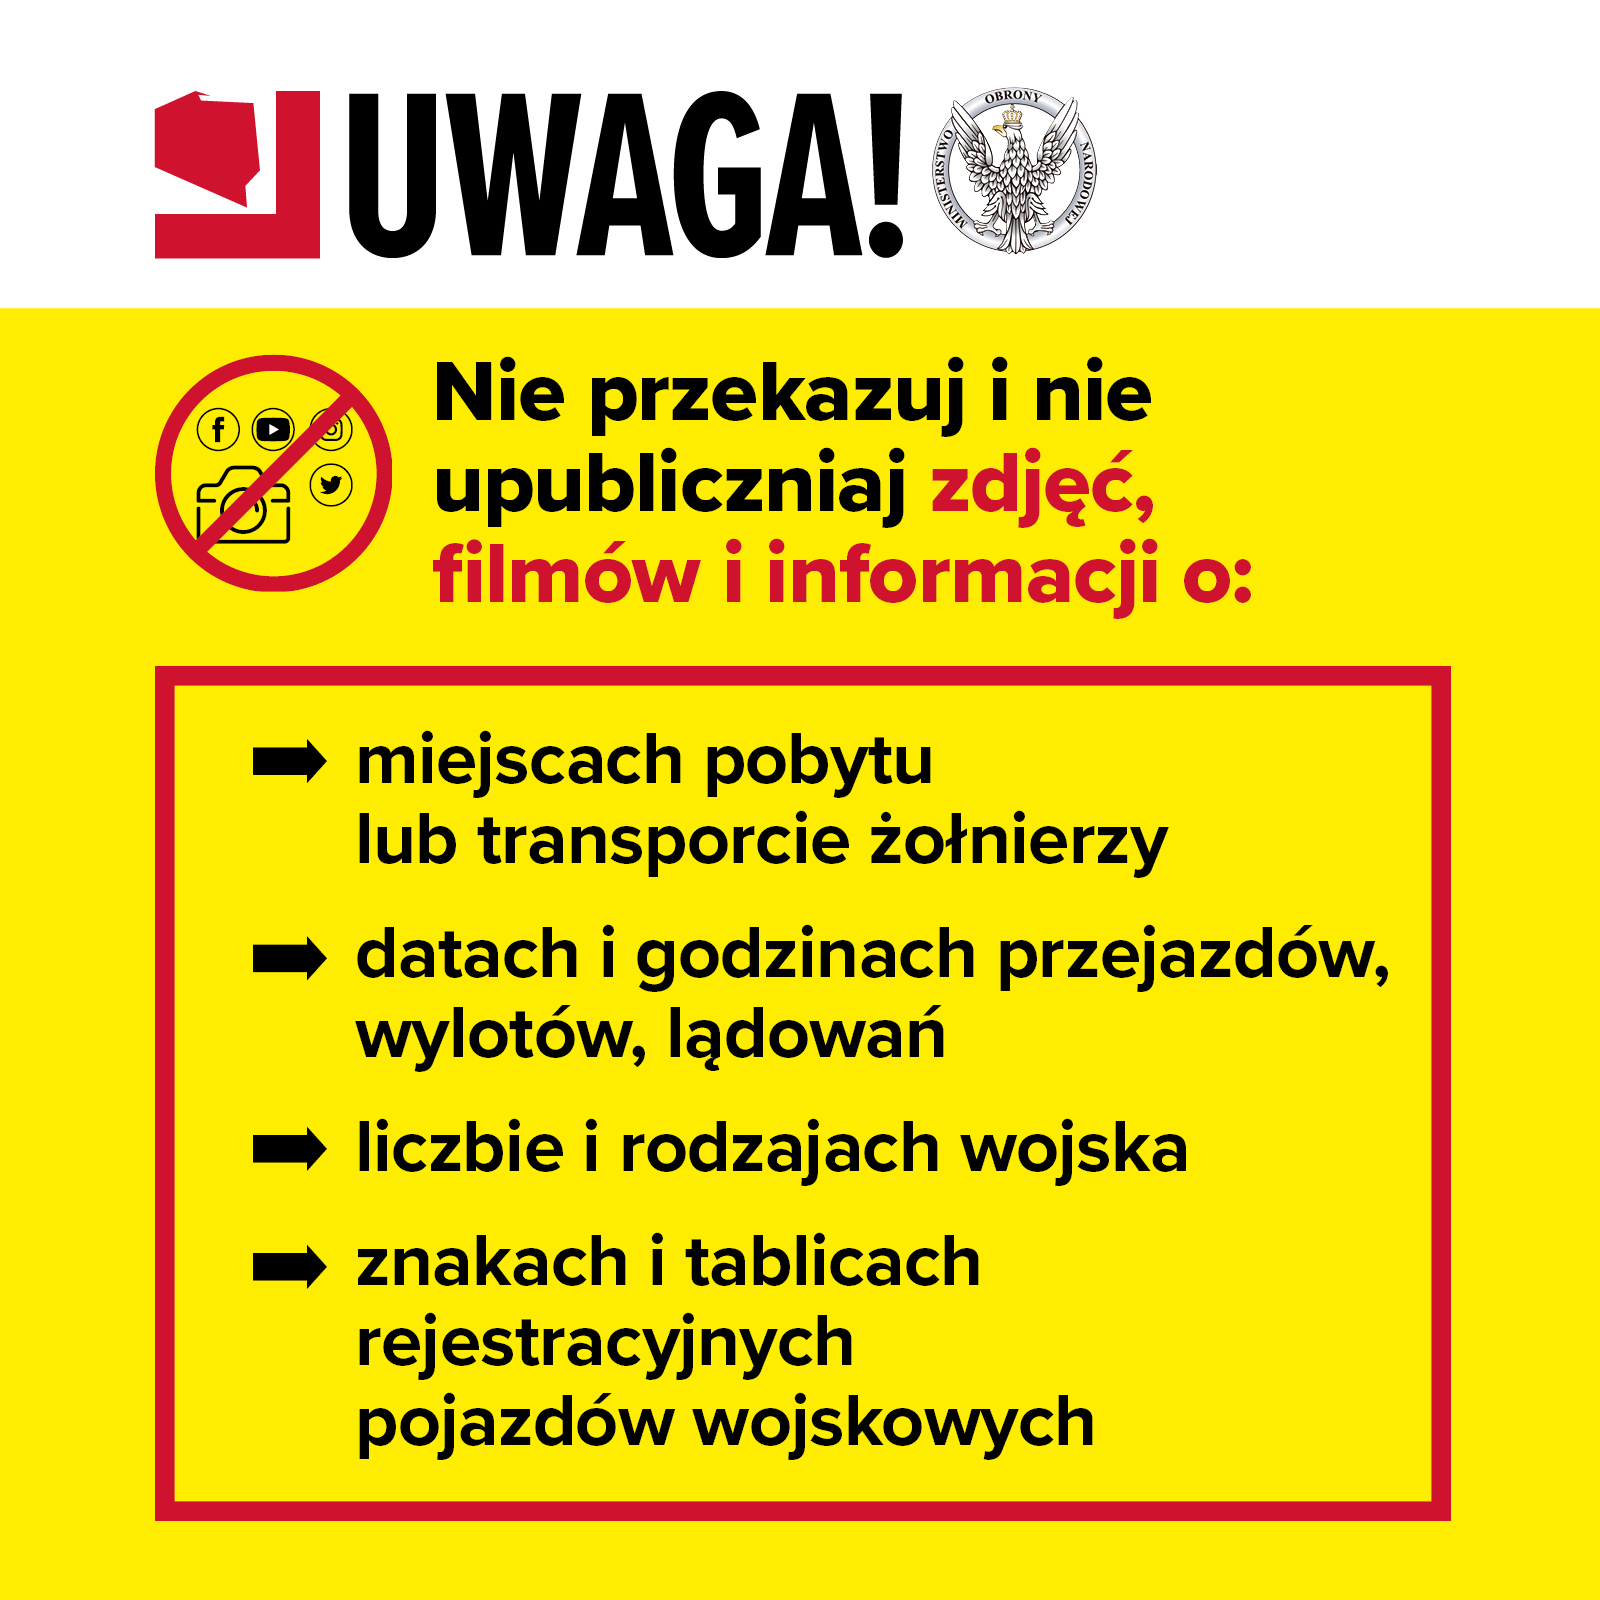 mat.: Wojsko Polskie